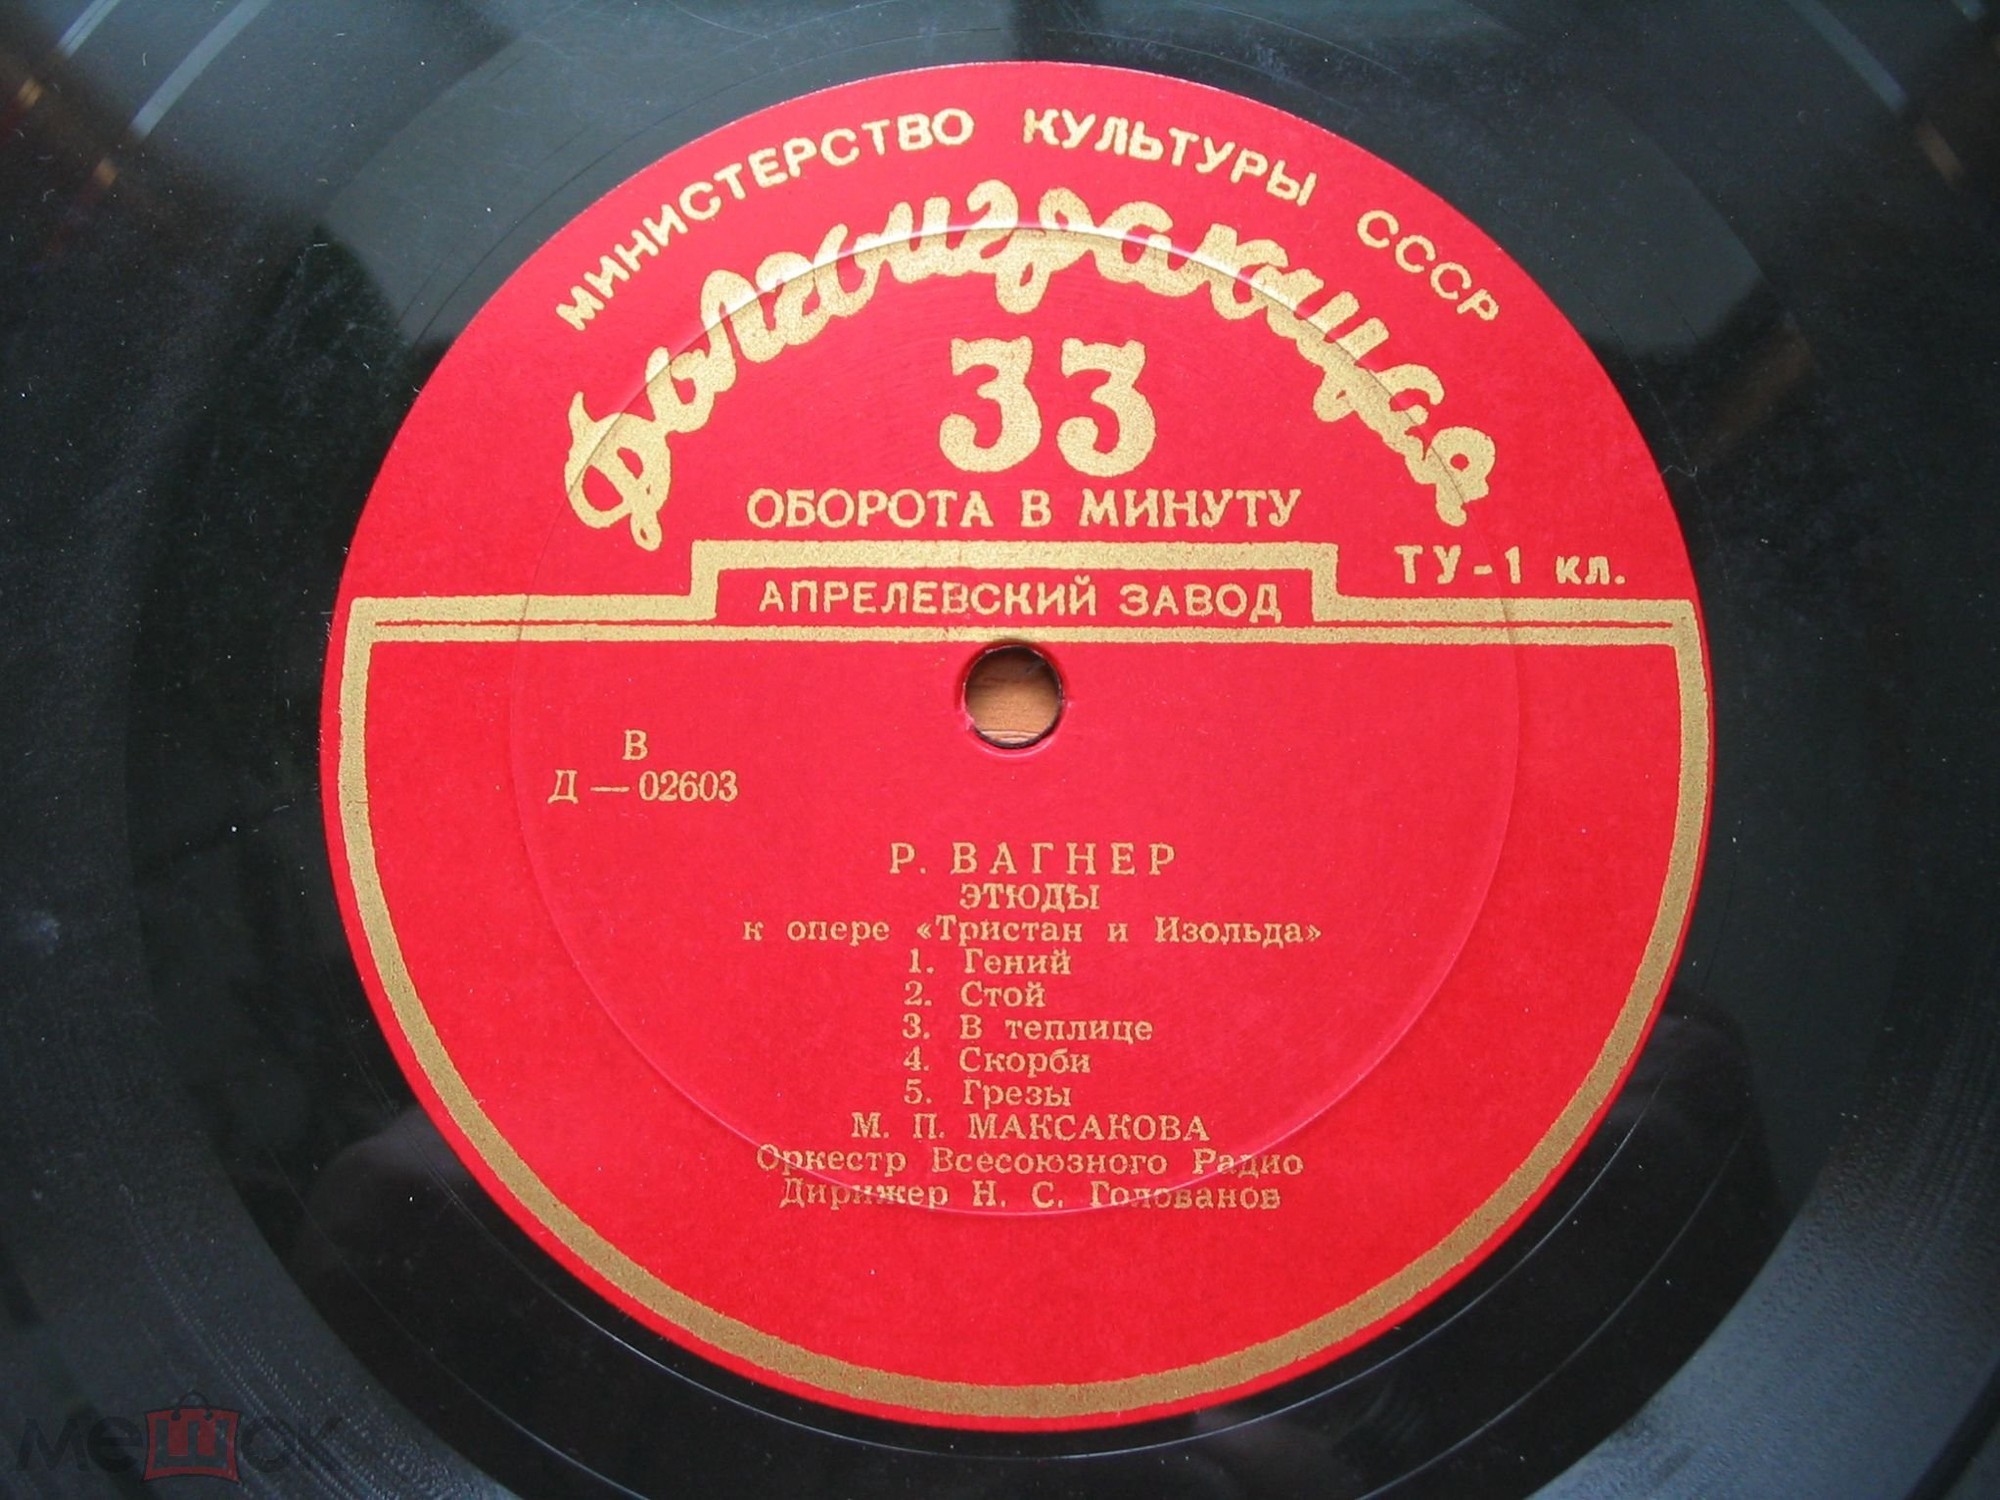 Мария МАКСАКОВА (меццо-сопрано, 1902-1974)